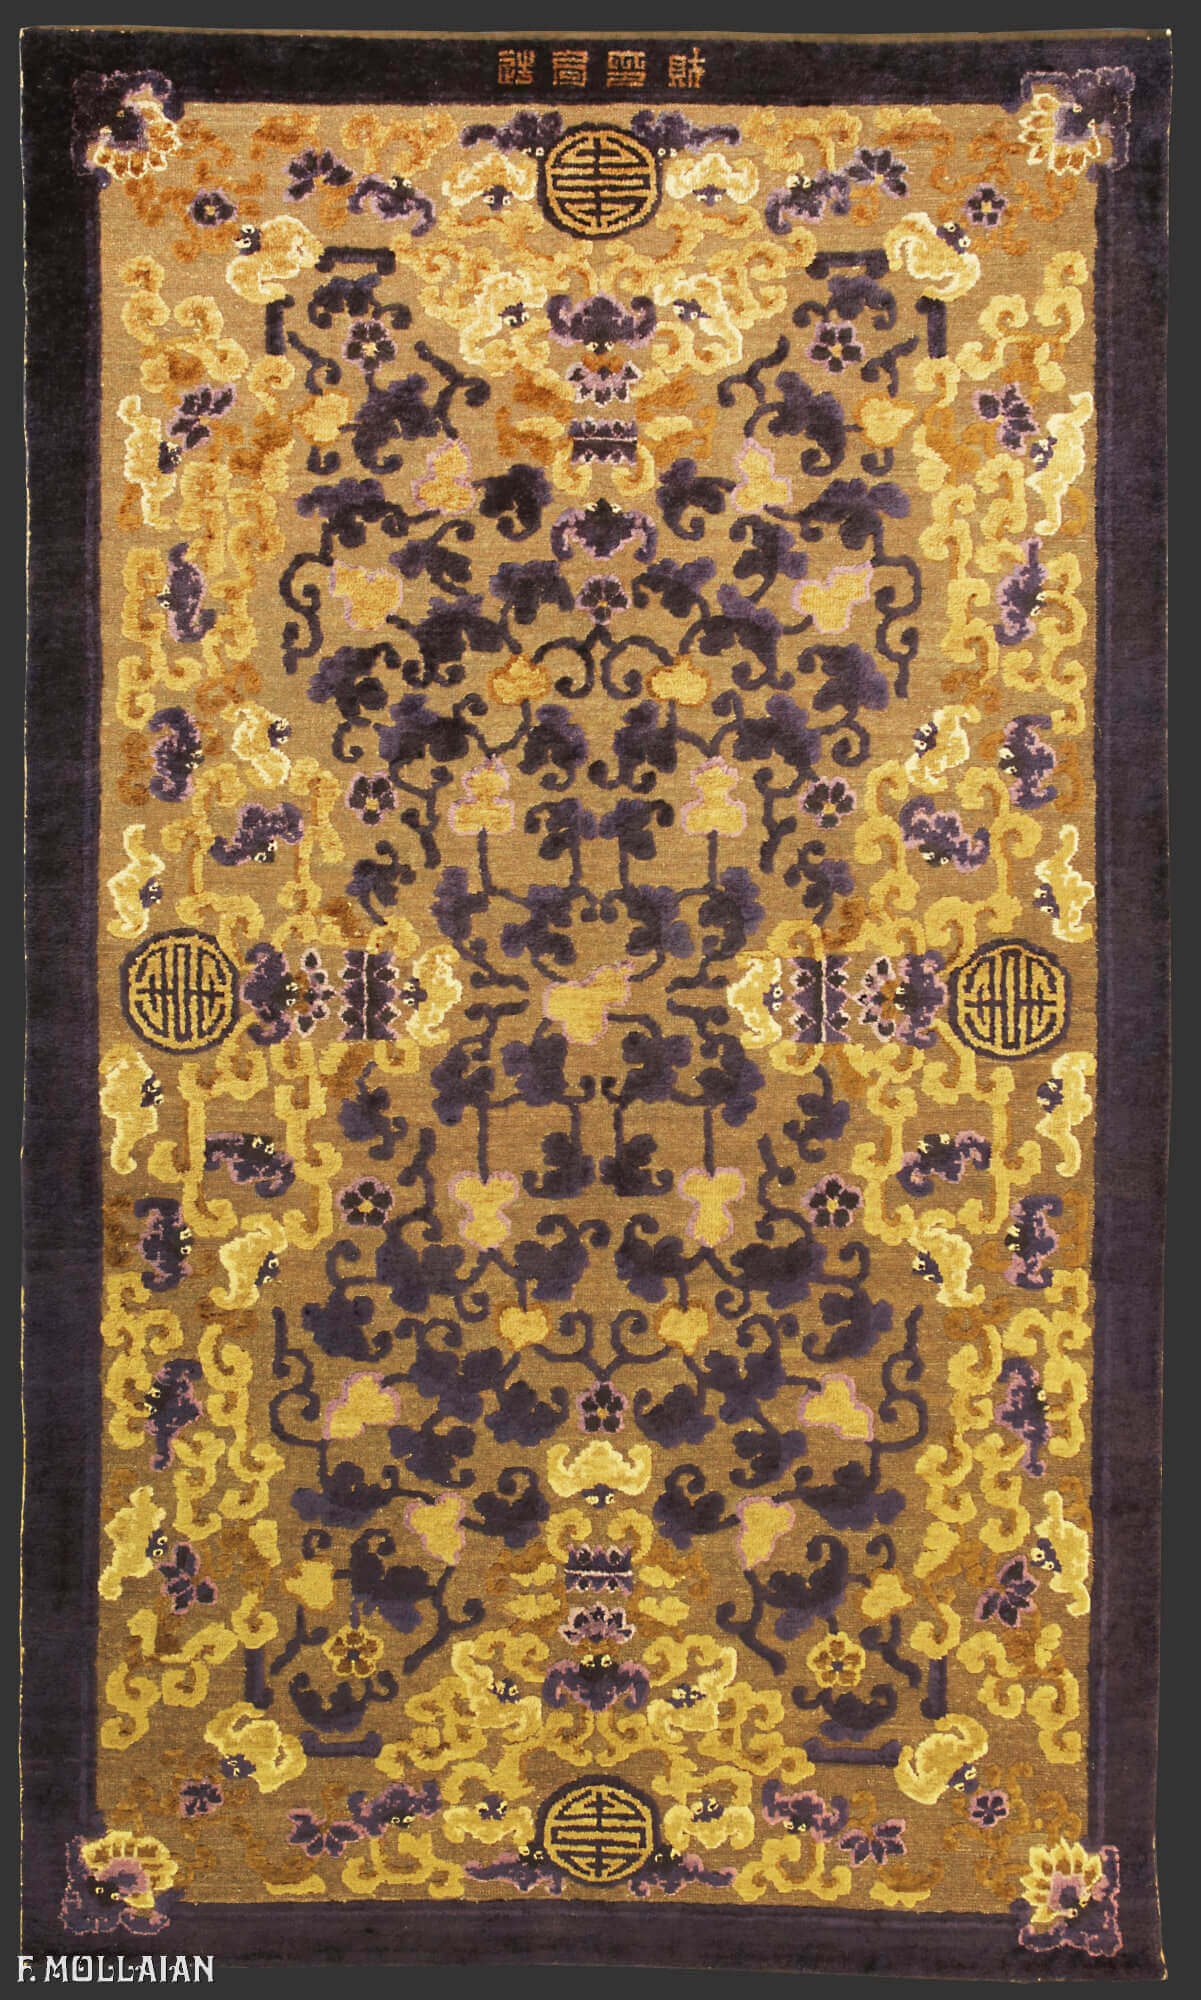 Antique Imperial Palace Chinese Peking Silk Rug n°:49167166